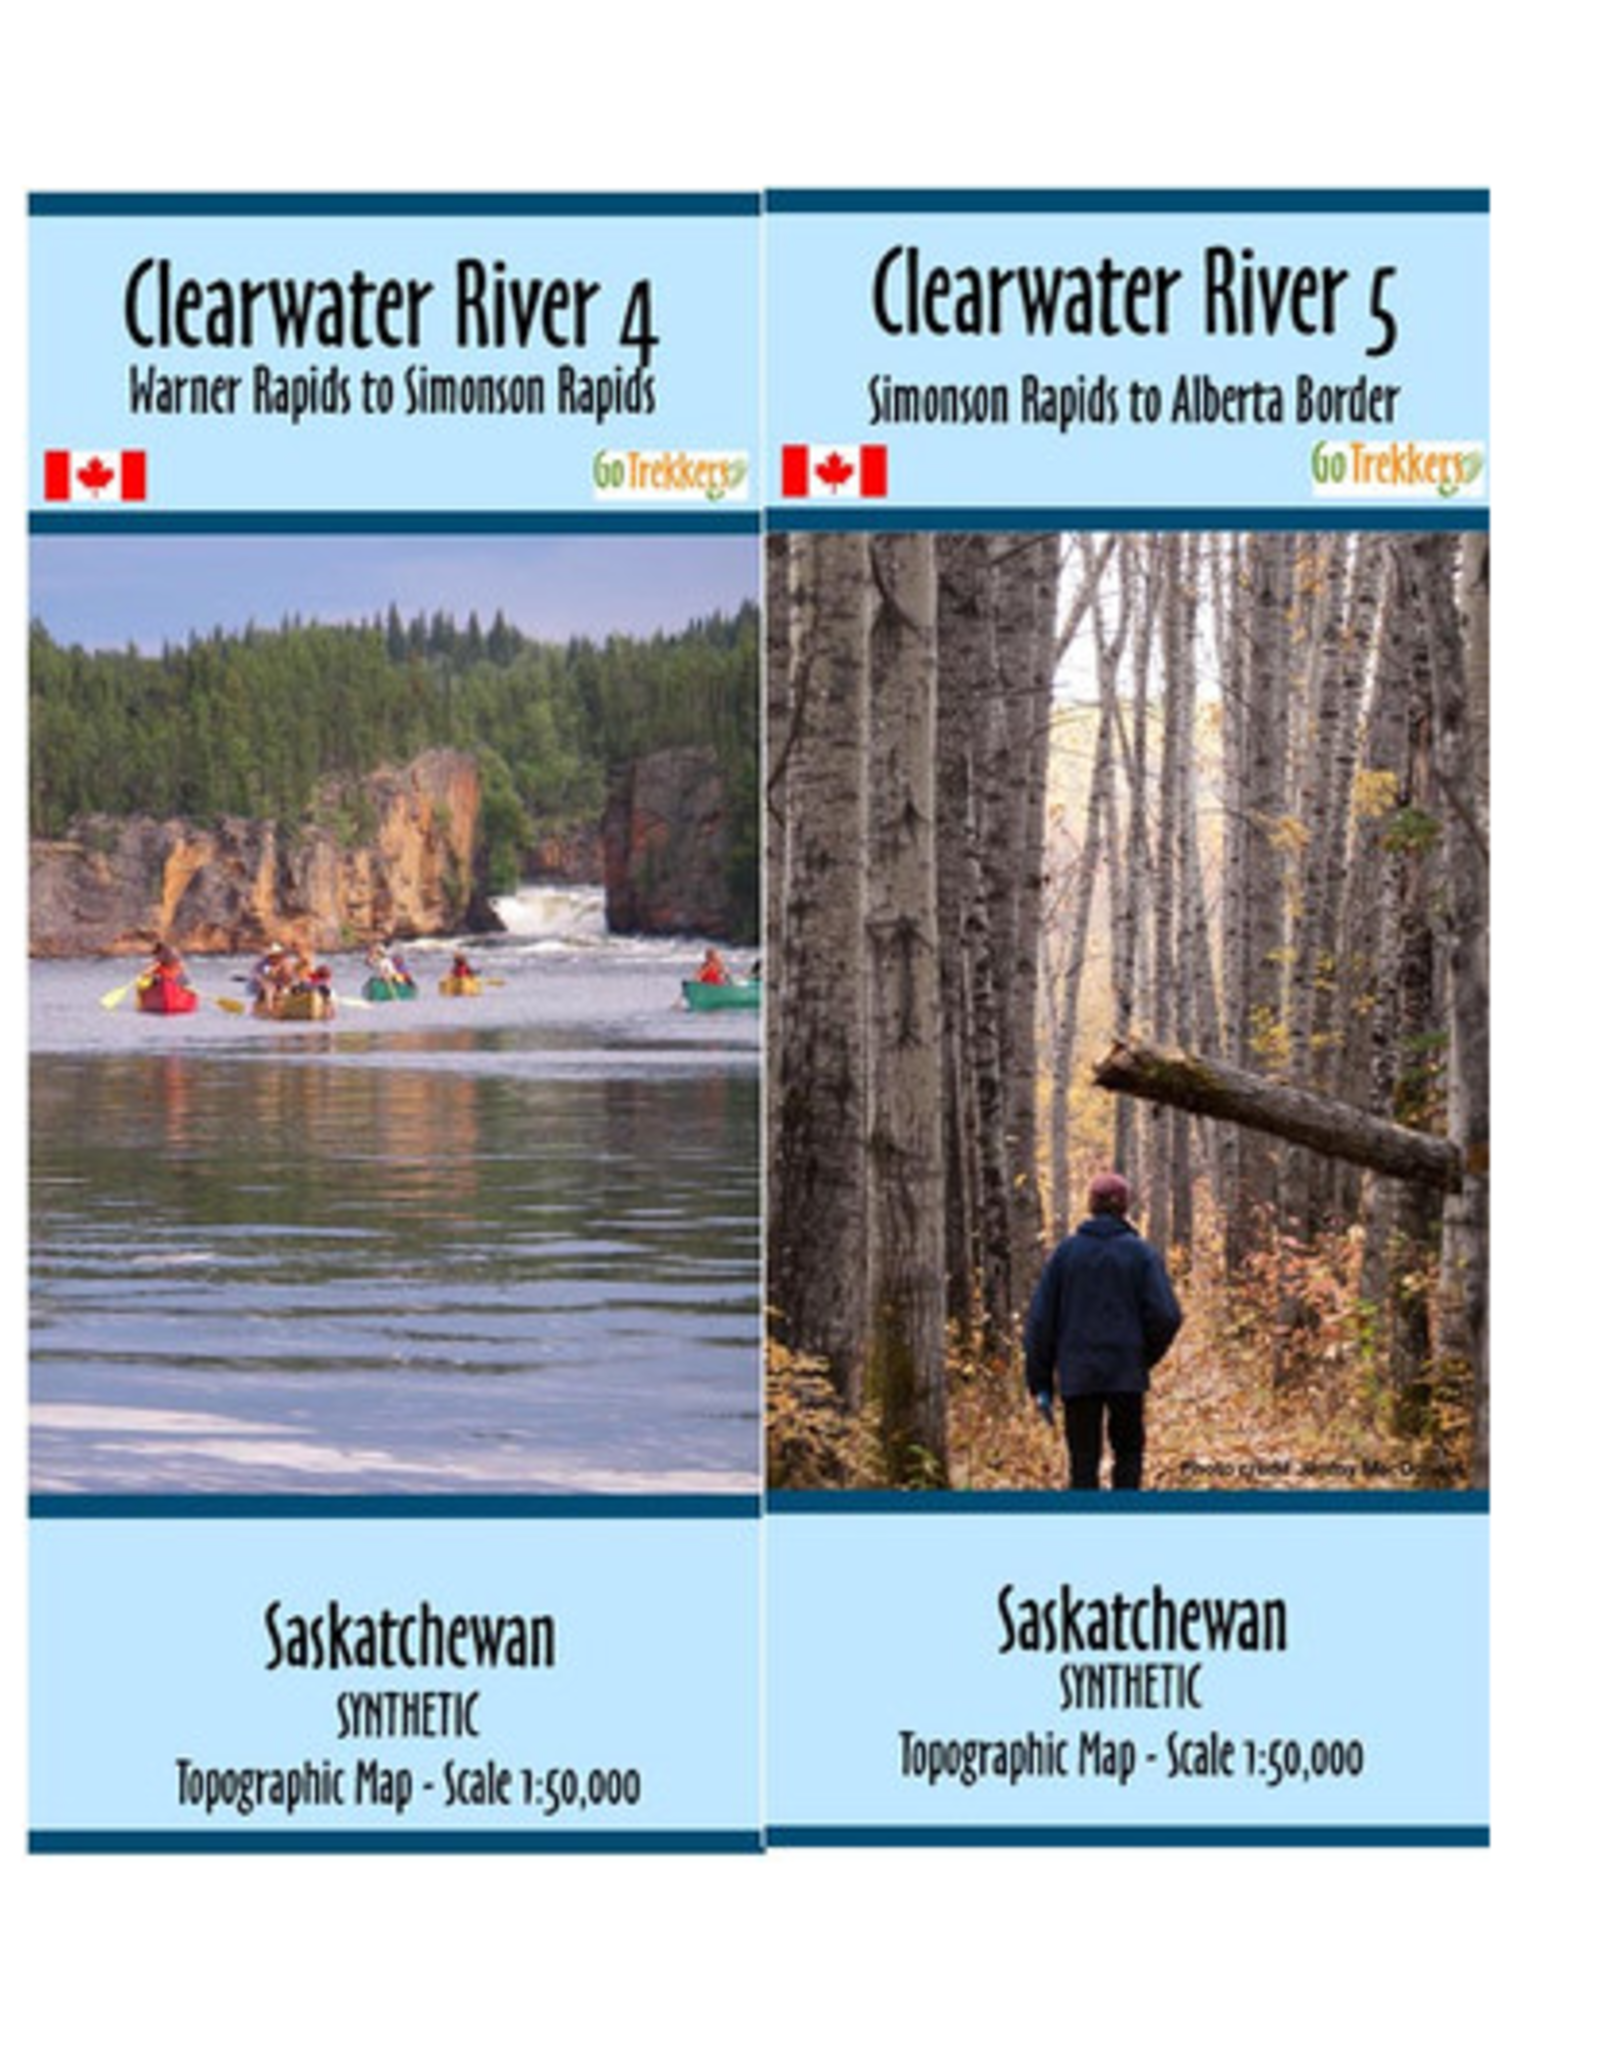 GoTrekkers Clearwater River 4 & 5 - Warner Rapids to Alberta Border Map Set - SYNTHETIC